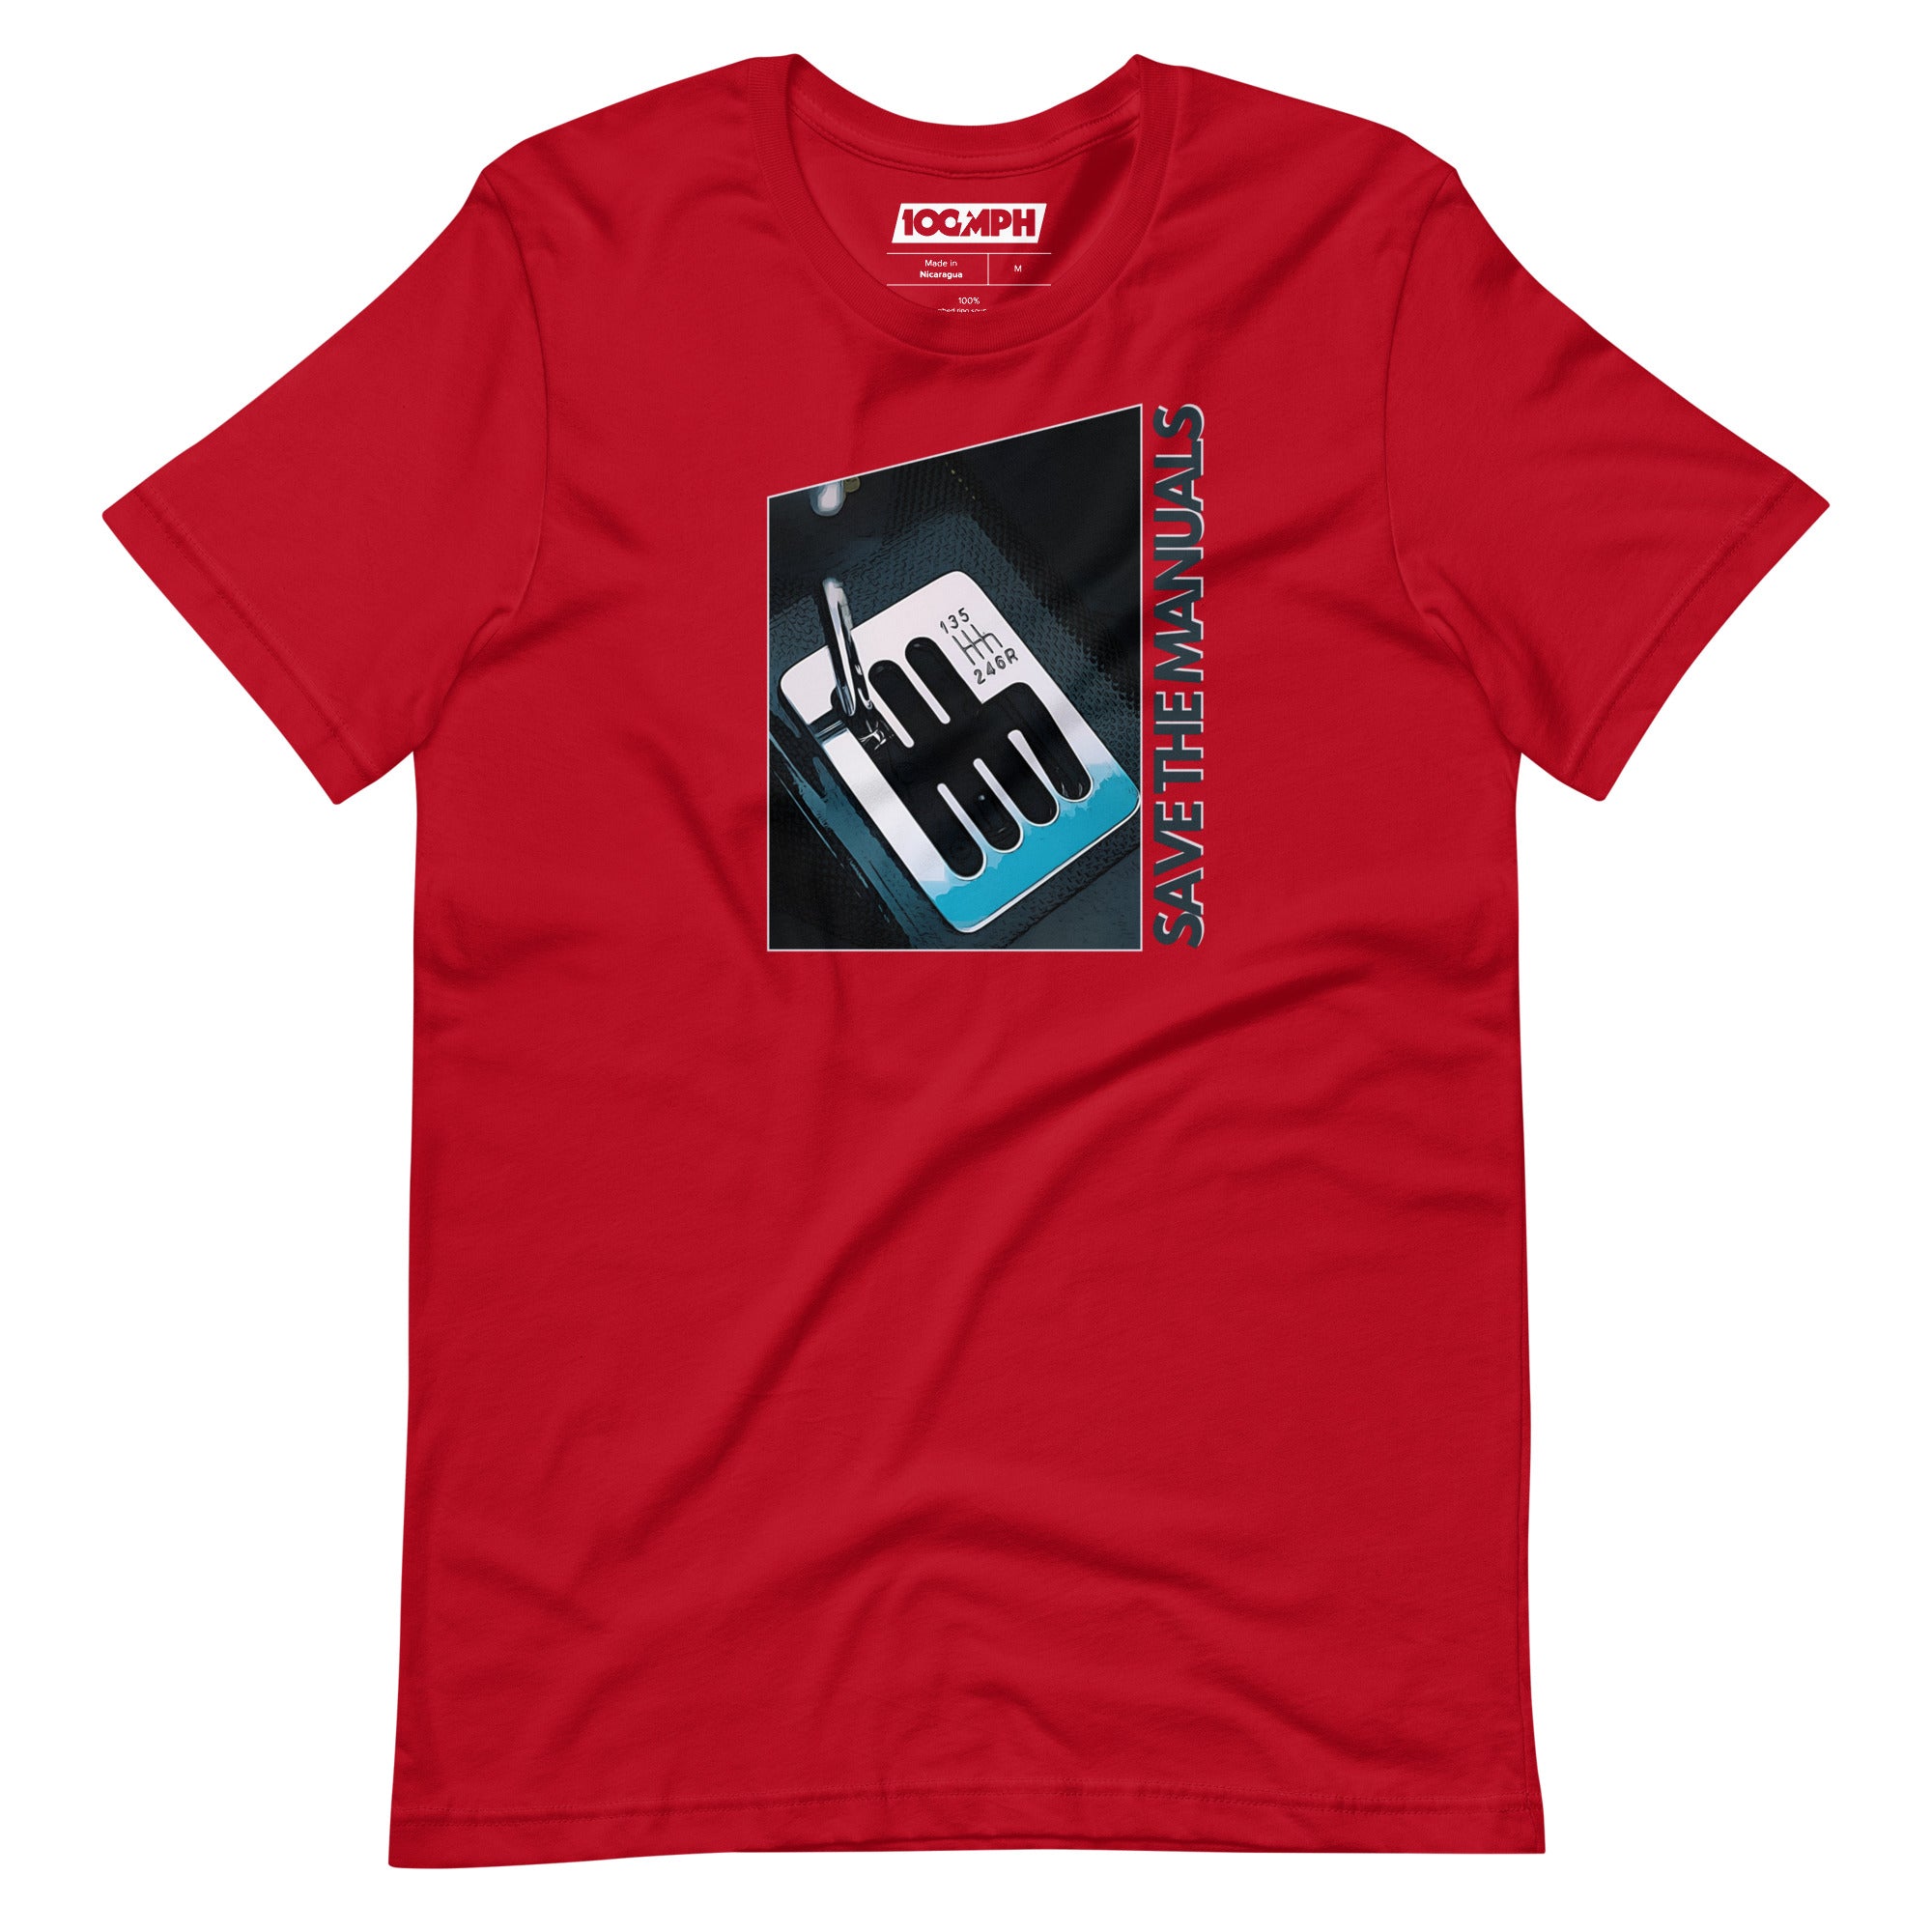 "Save the Manuals Six Speed" Tee Shirt